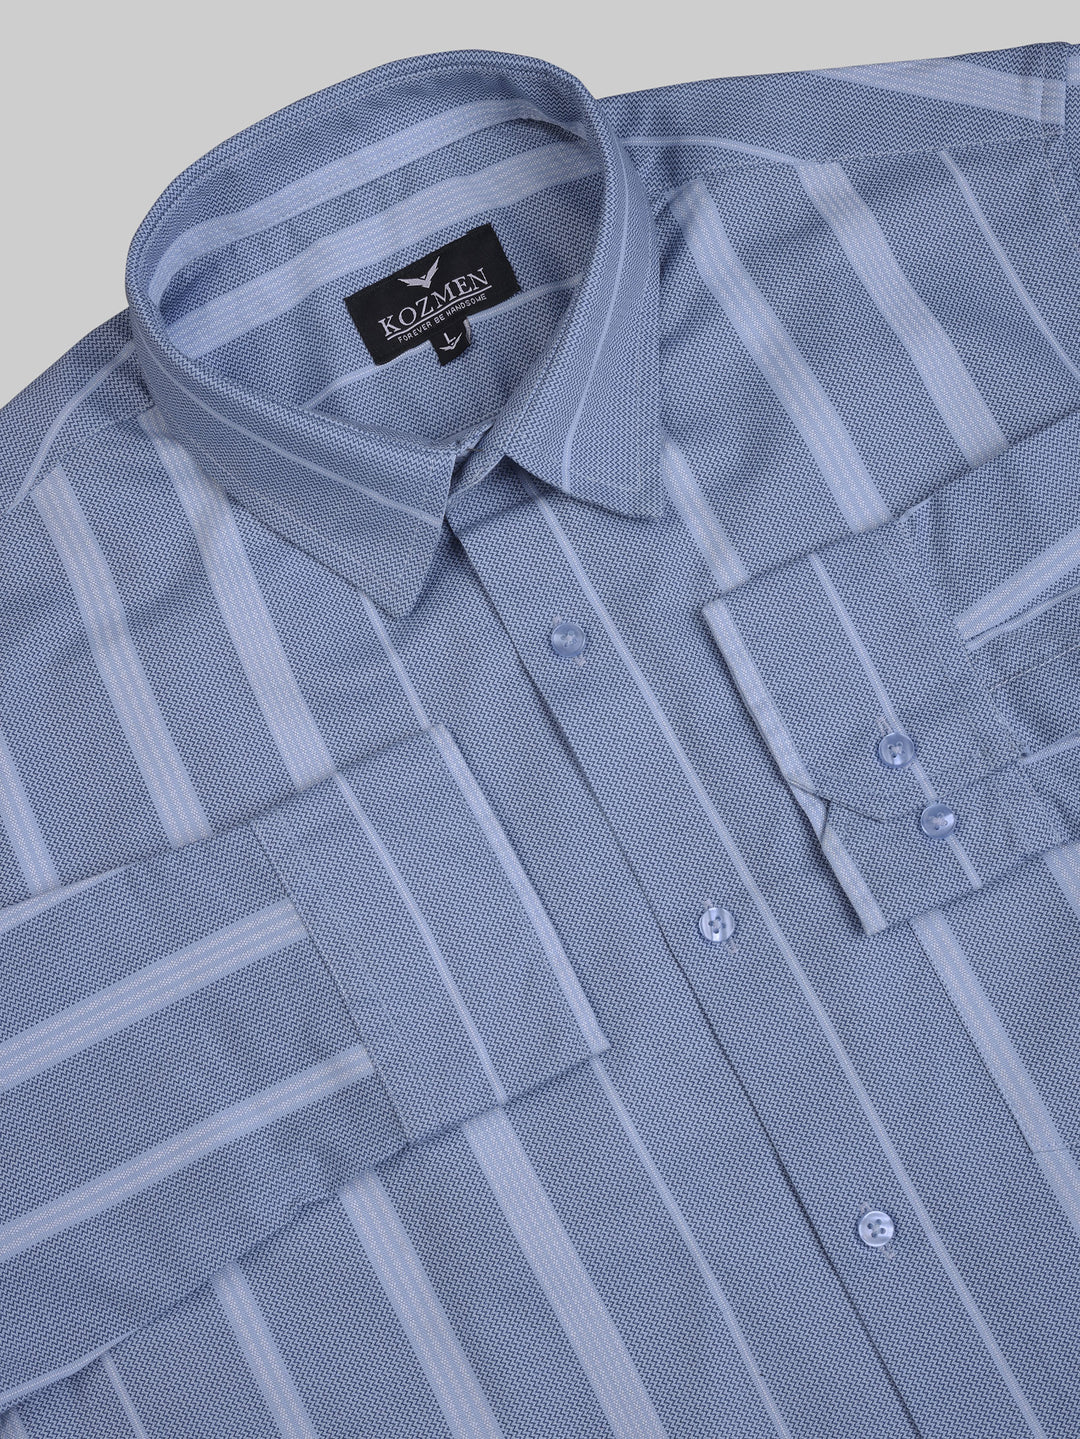 Tropical Blue Rising Pin Striped Cotton Shirt